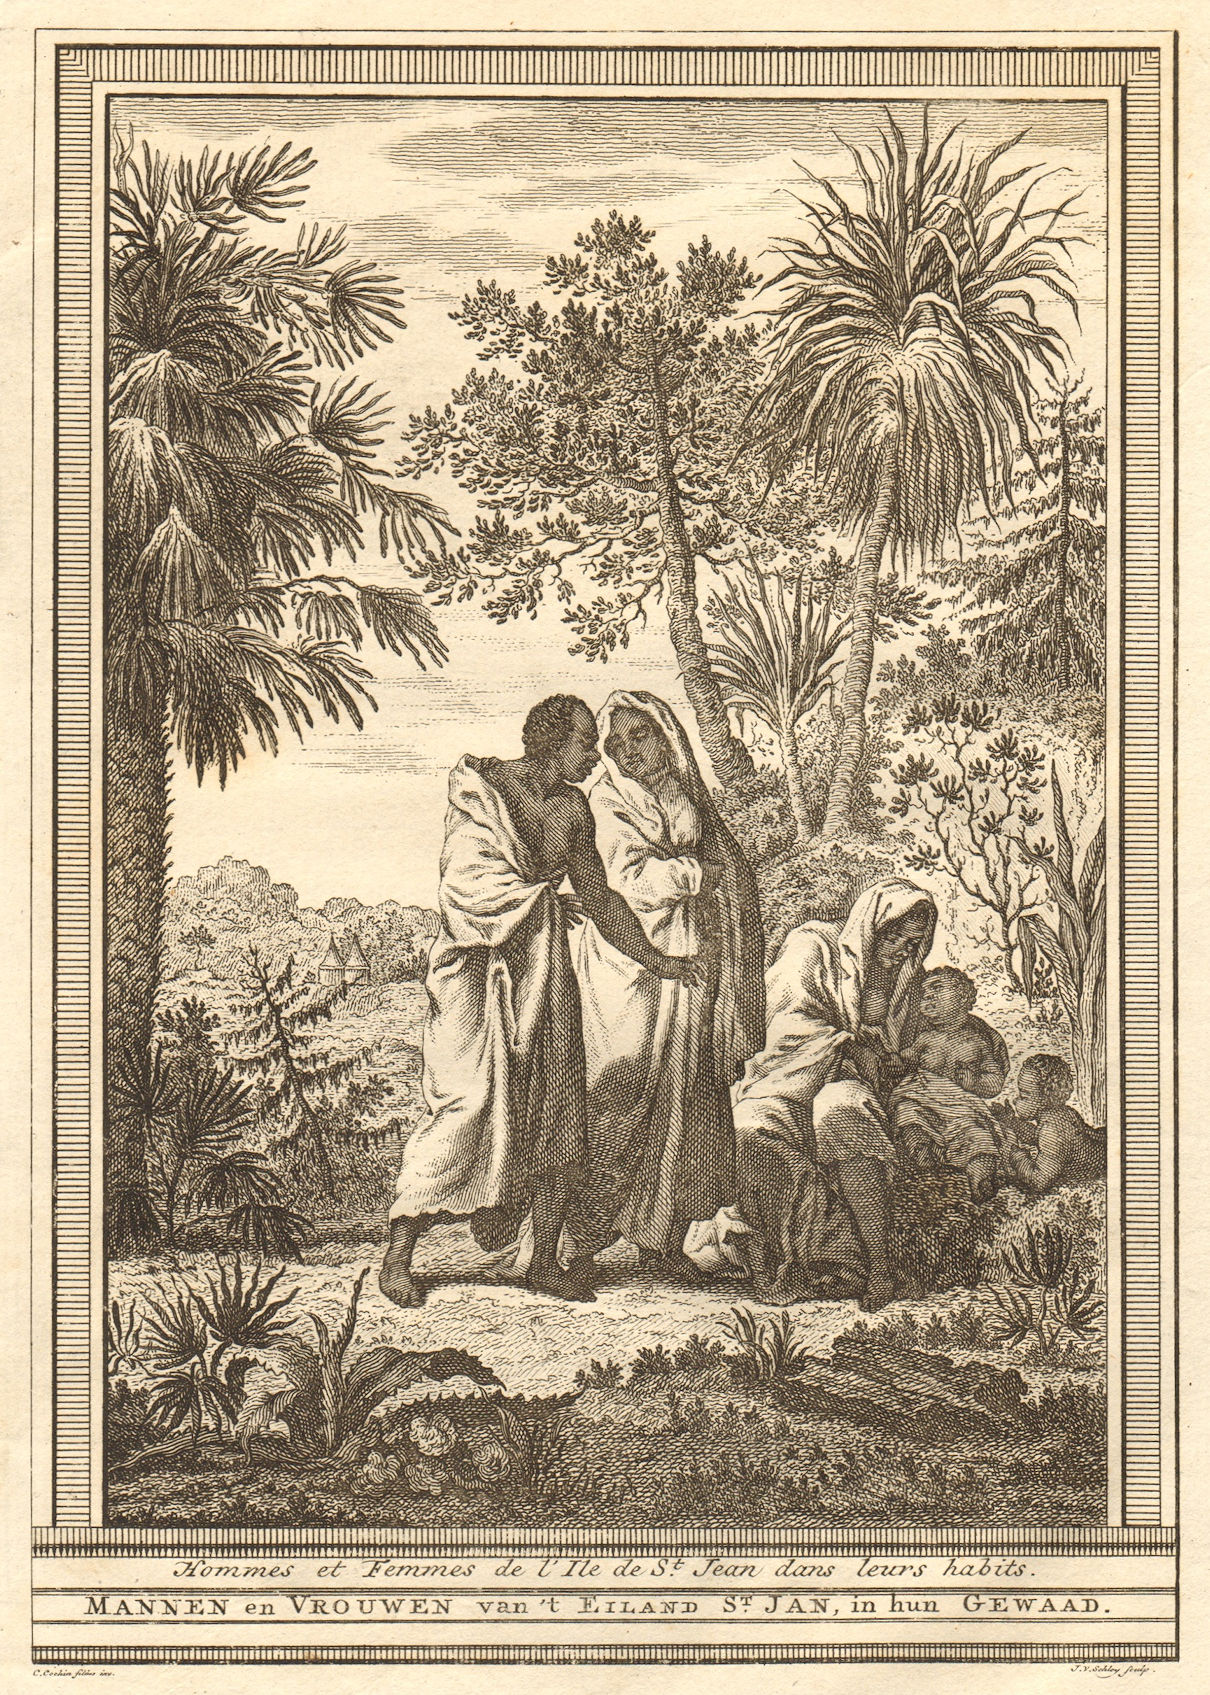 Associate Product Cape Verde islands. Men & women of St Jean (Brava) in their clothes. SCHLEY 1747